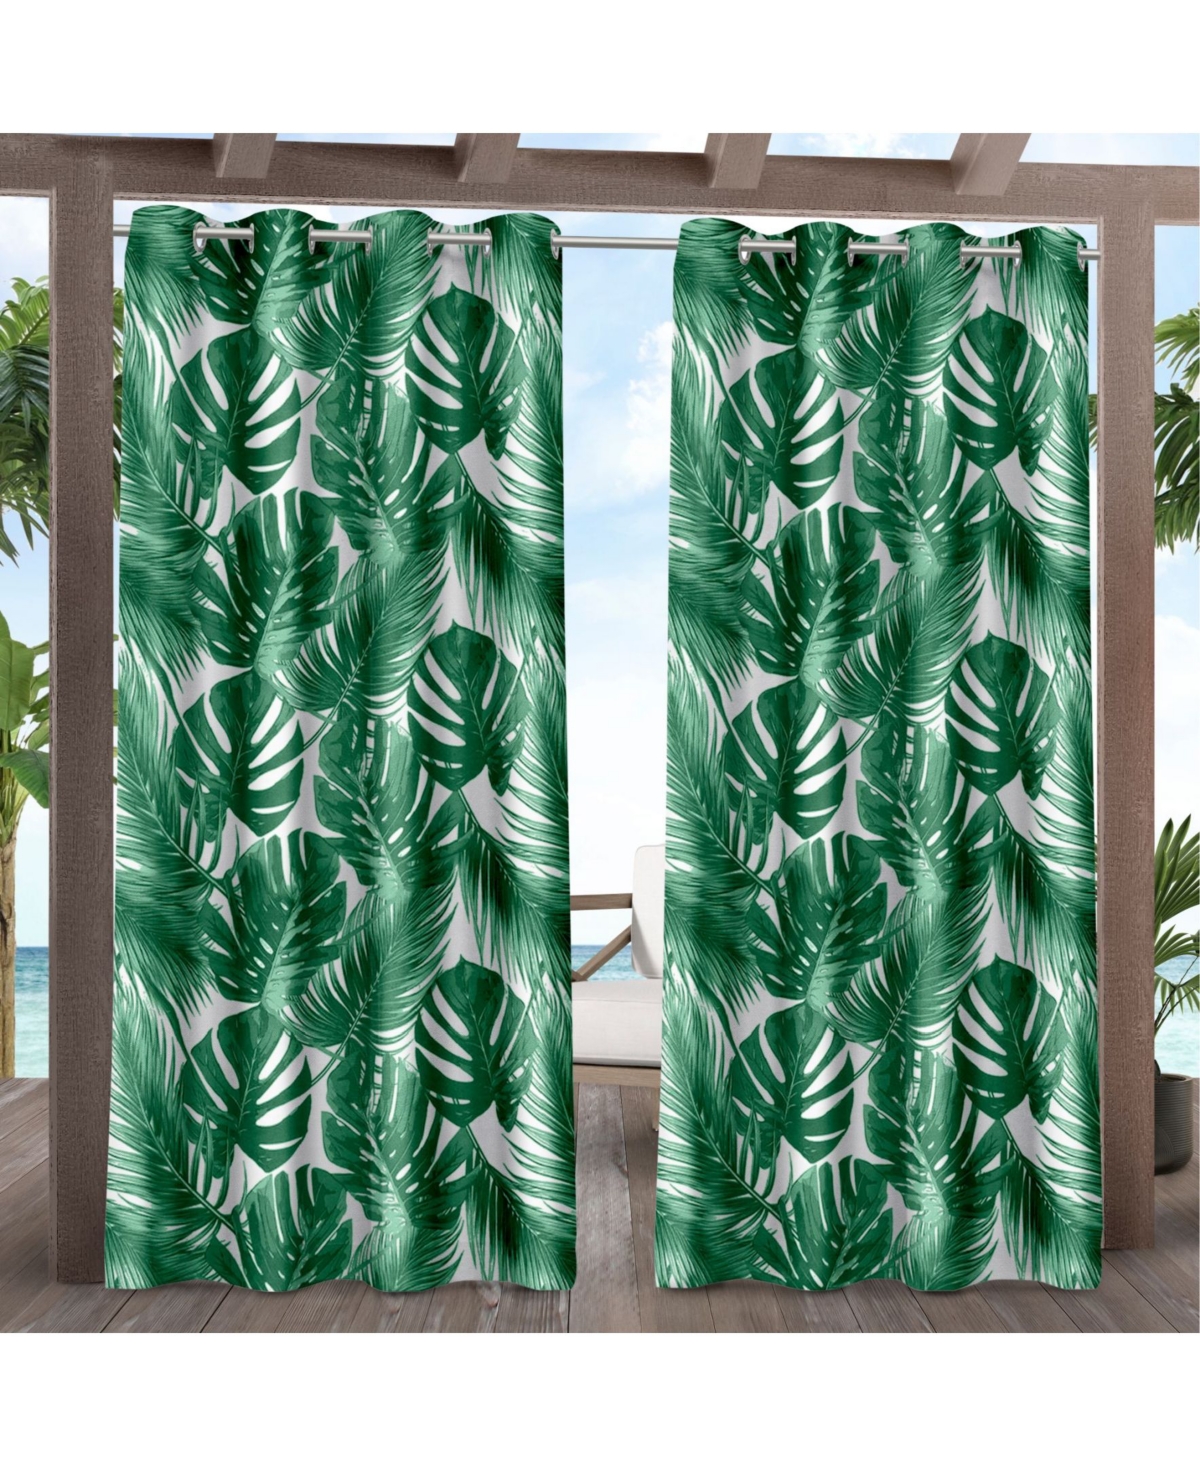 Curtains Jamaica Palm Indoor - Outdoor Light Filtering Grommet Top Curtain Panel Pair, 54" x 96", Set of 2 - Green